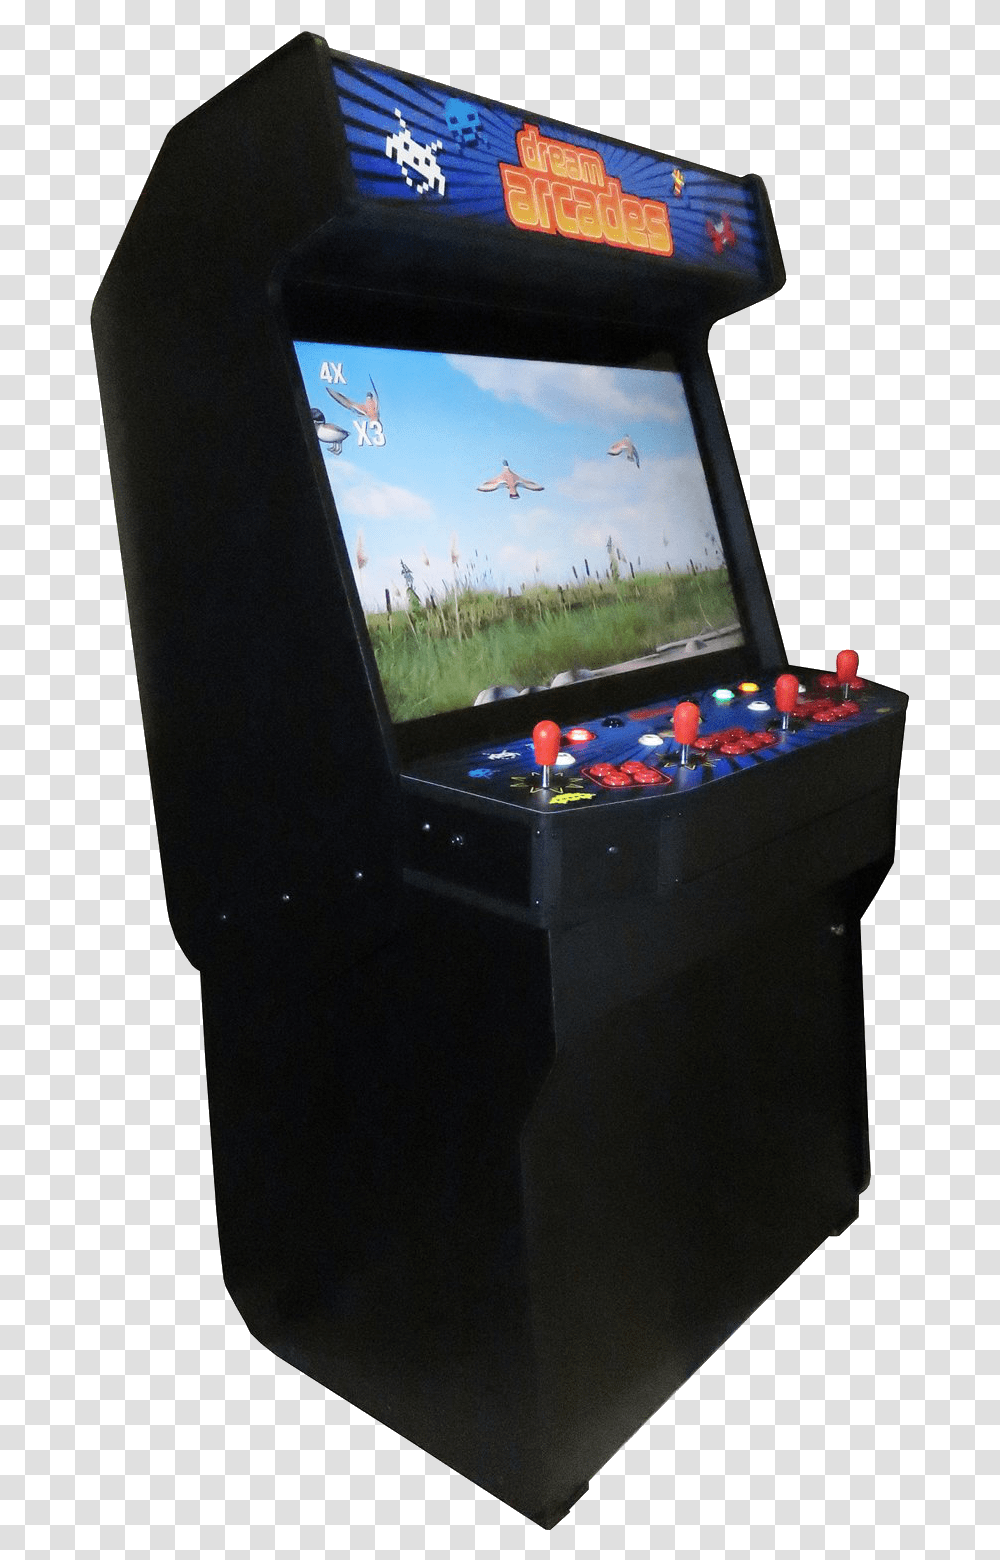 Download Hd Donkey Kong Arcade Arcade Game, Arcade Game Machine, Airplane, Aircraft, Vehicle Transparent Png